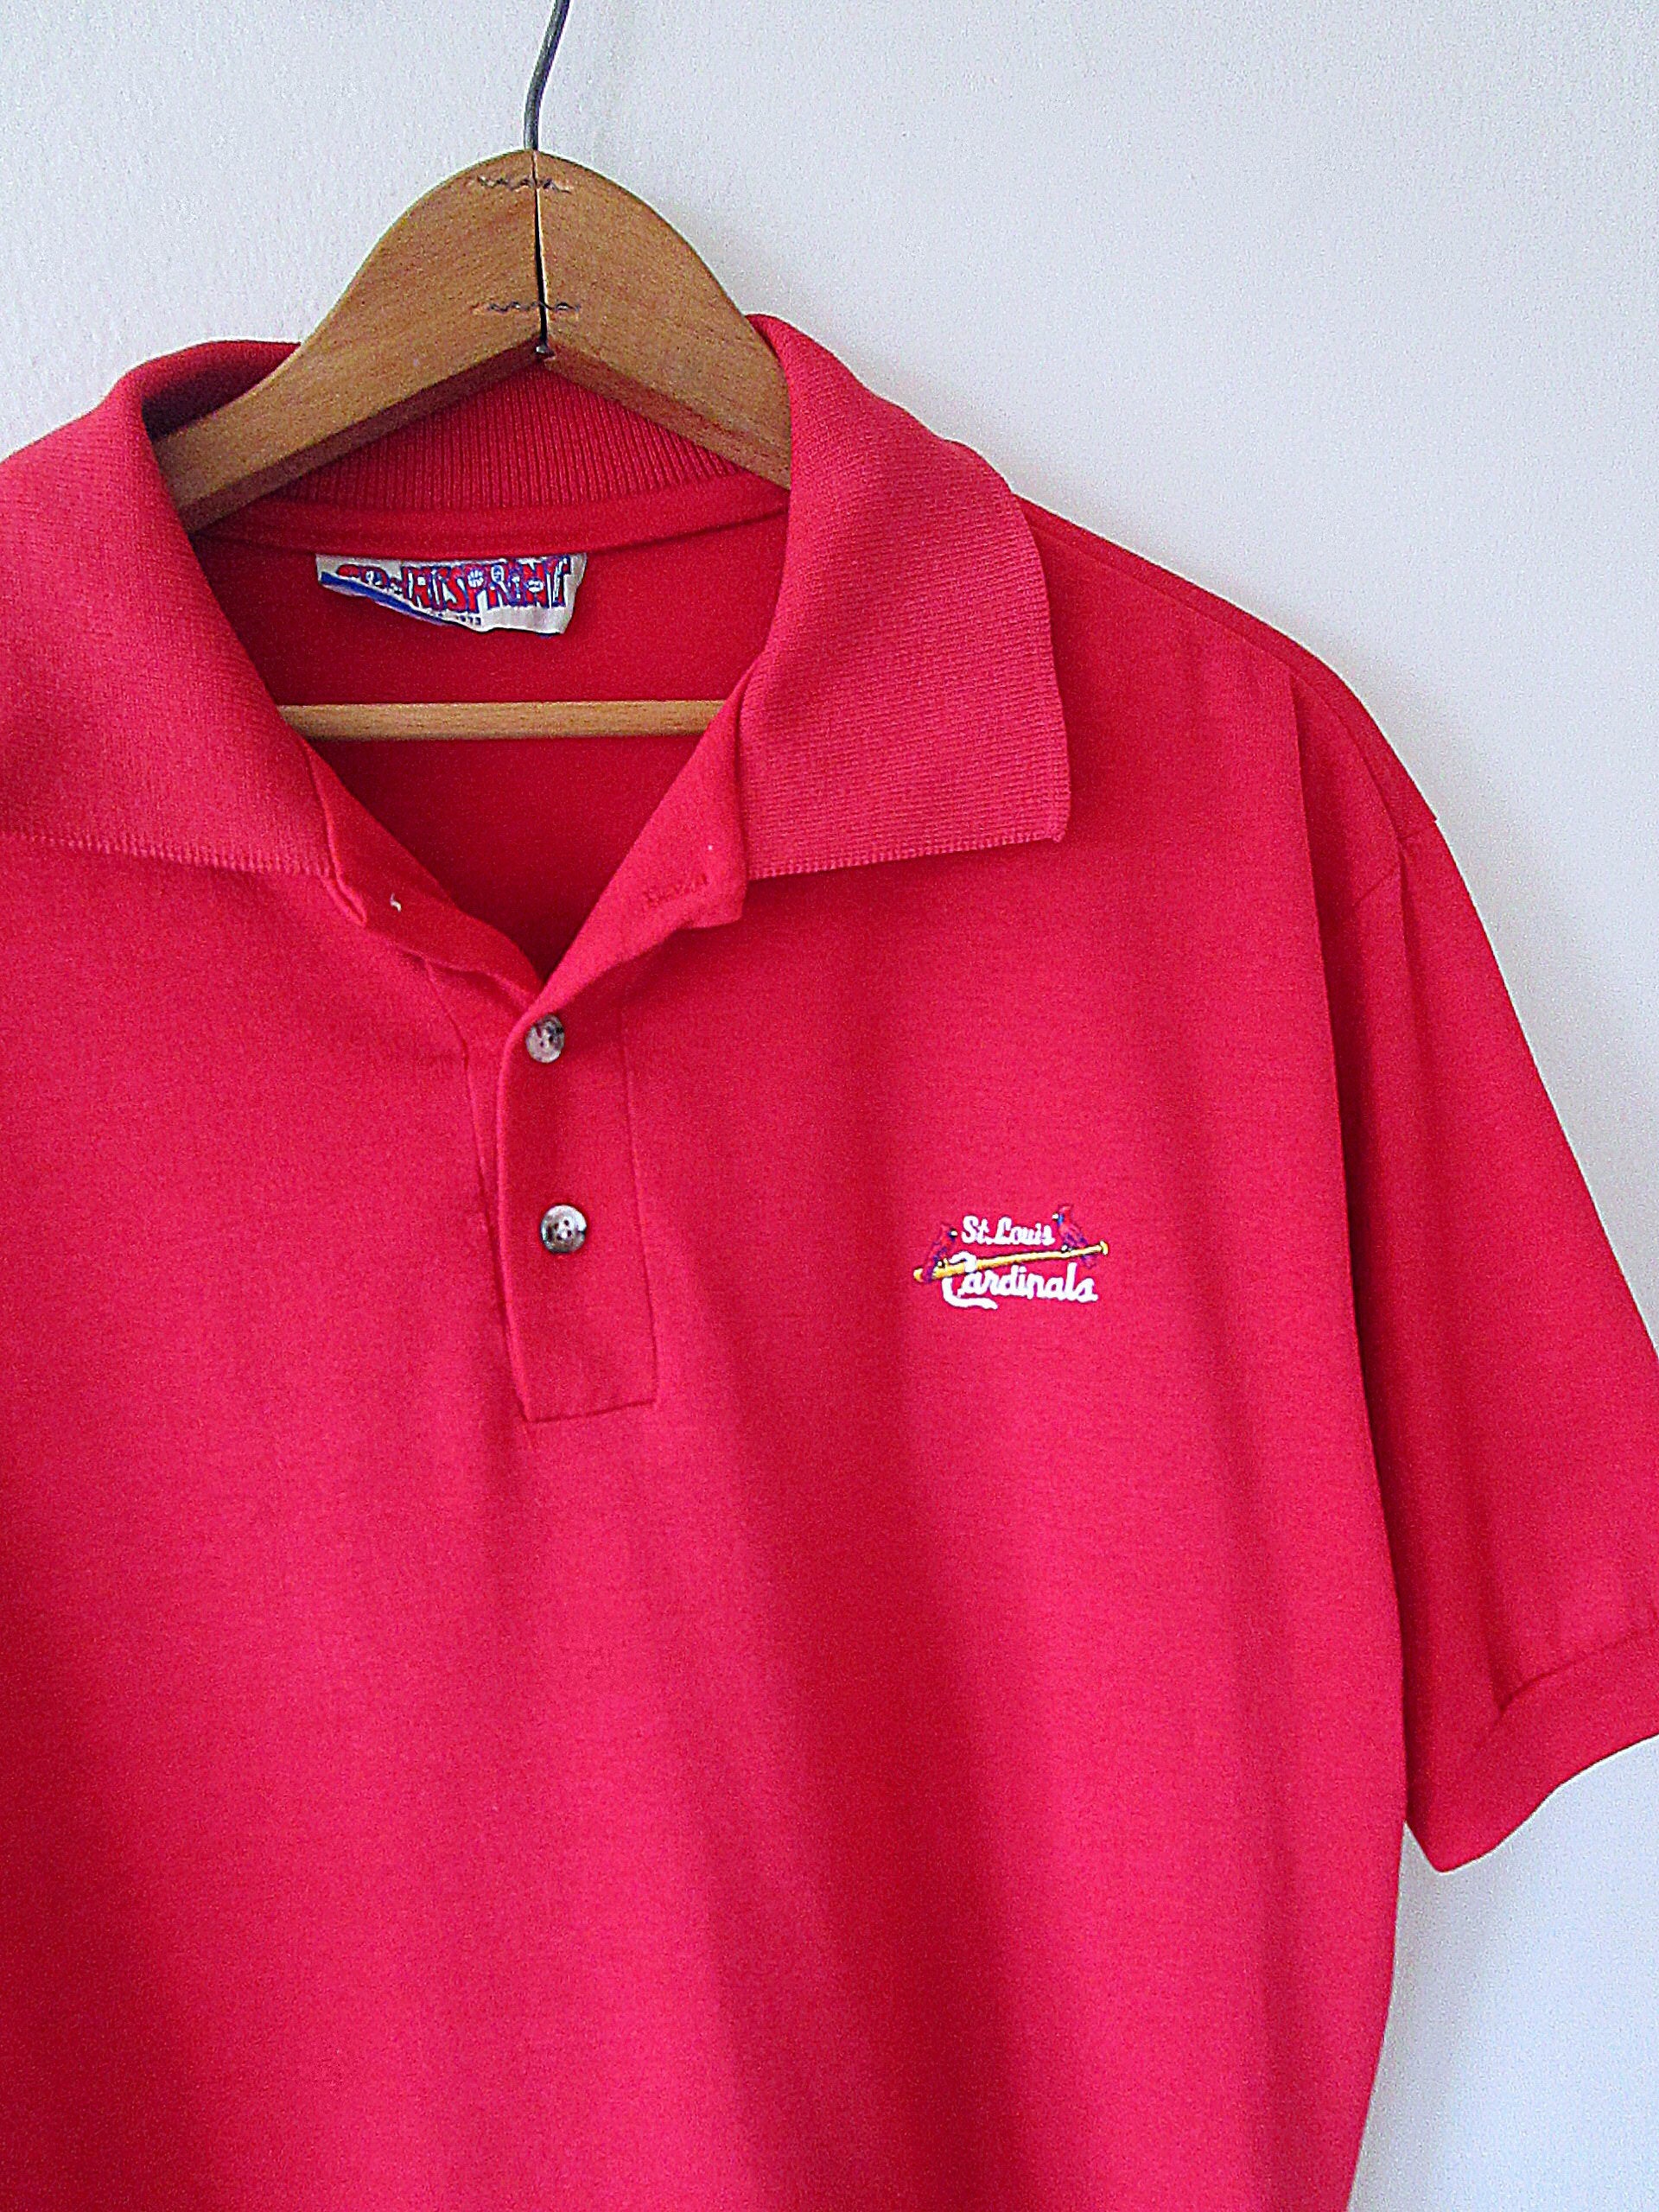 VTG St. Louis Cardinals Mens Polo Shirt Short Sleeve Size Large